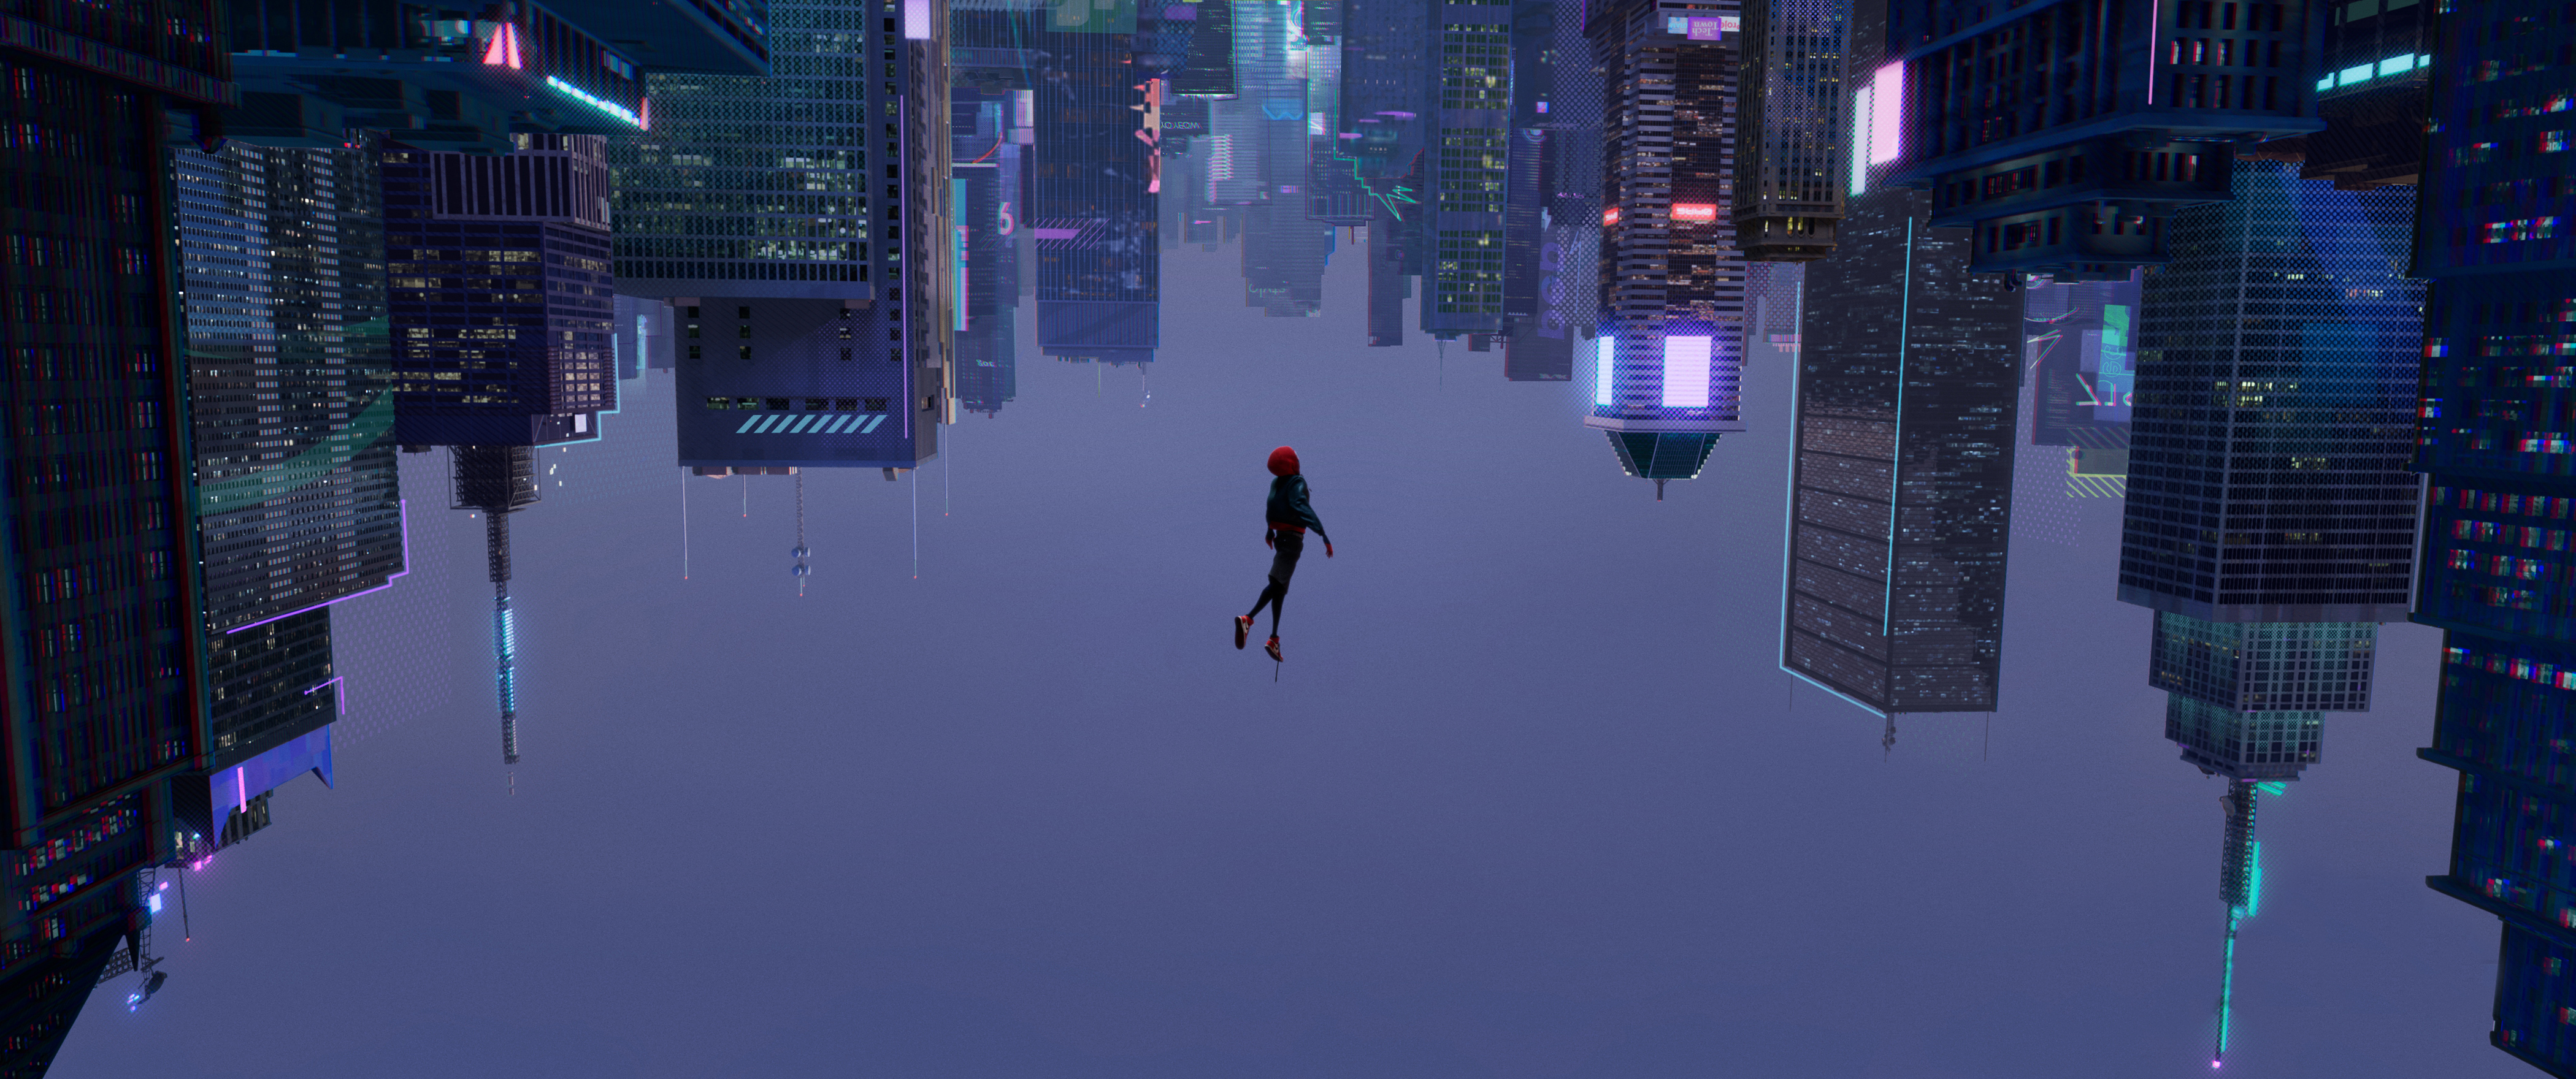 Spider Man: Into The Spider Verse 2018 Wallpaper